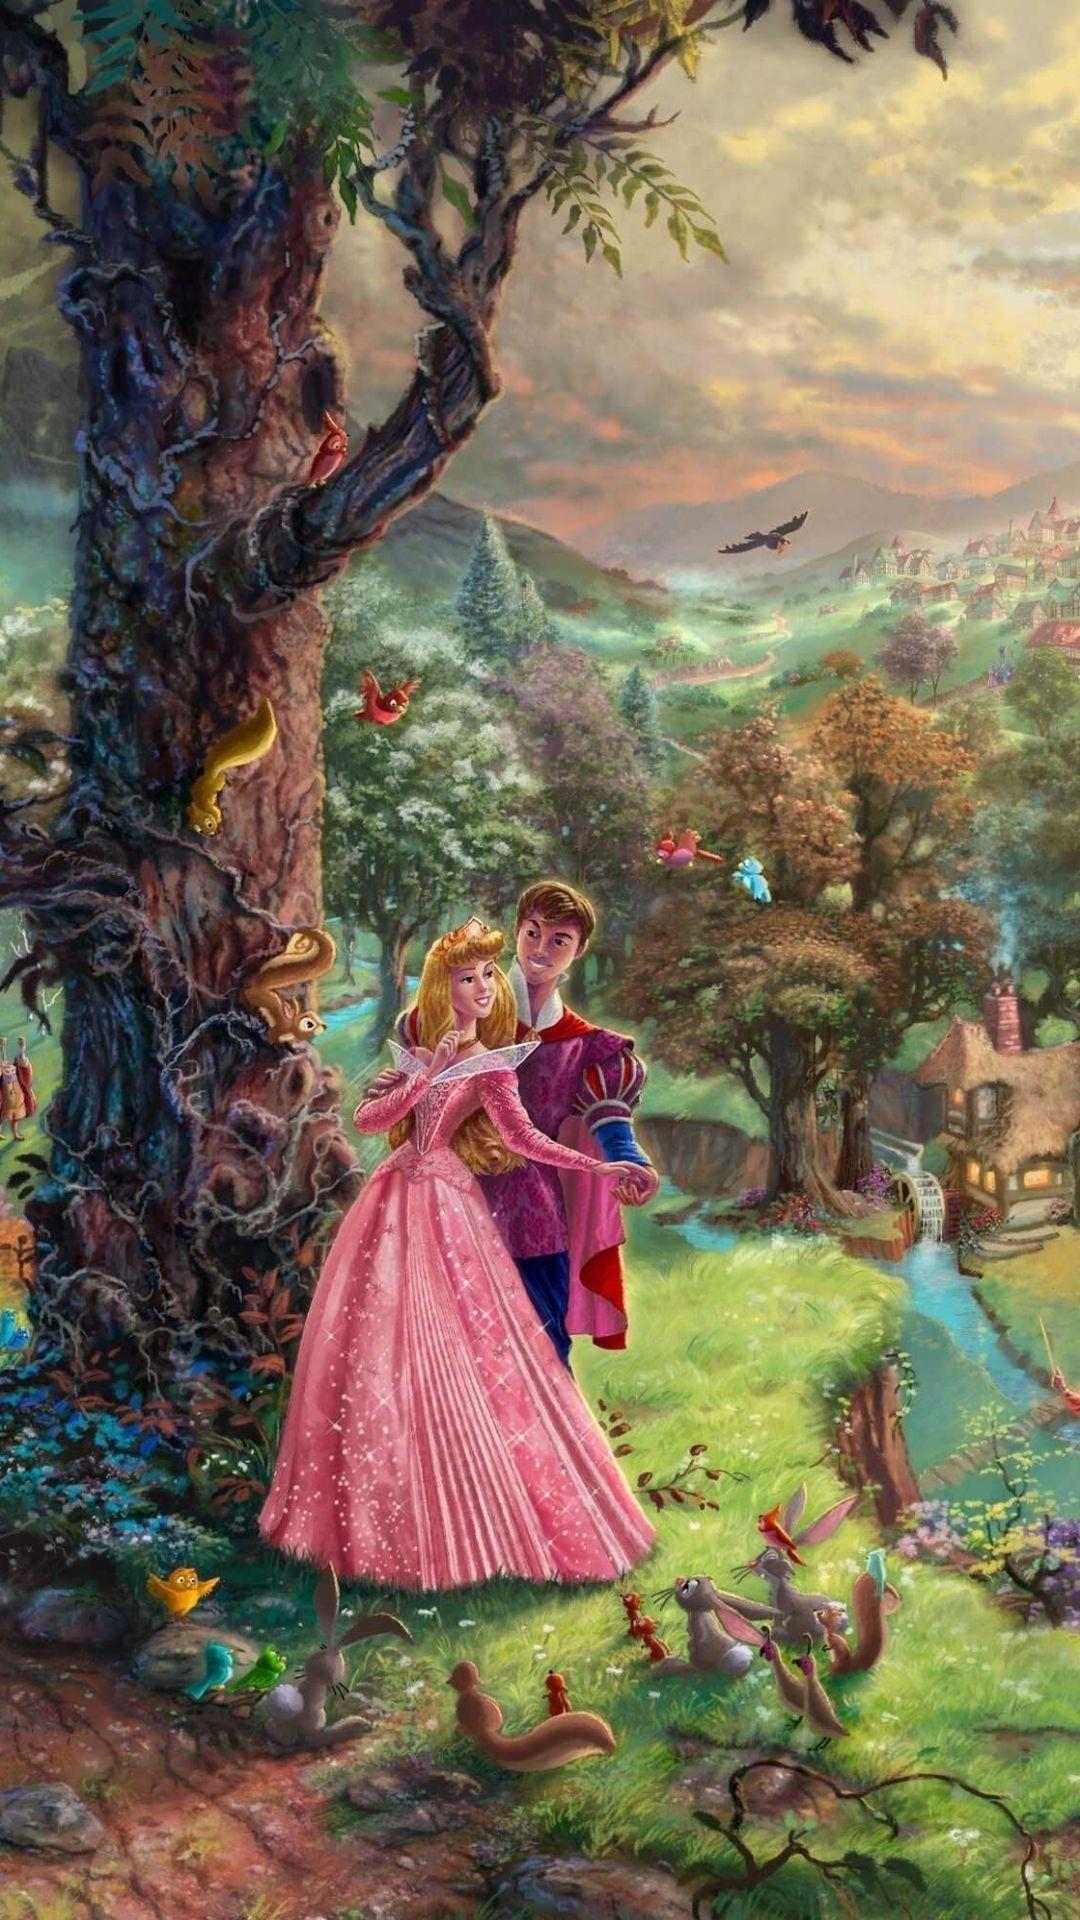 Disney Princess mobile wallpaper collection - YouLoveIt.com  Disney  princess fan art, Disney princess aurora, Disney characters wallpaper